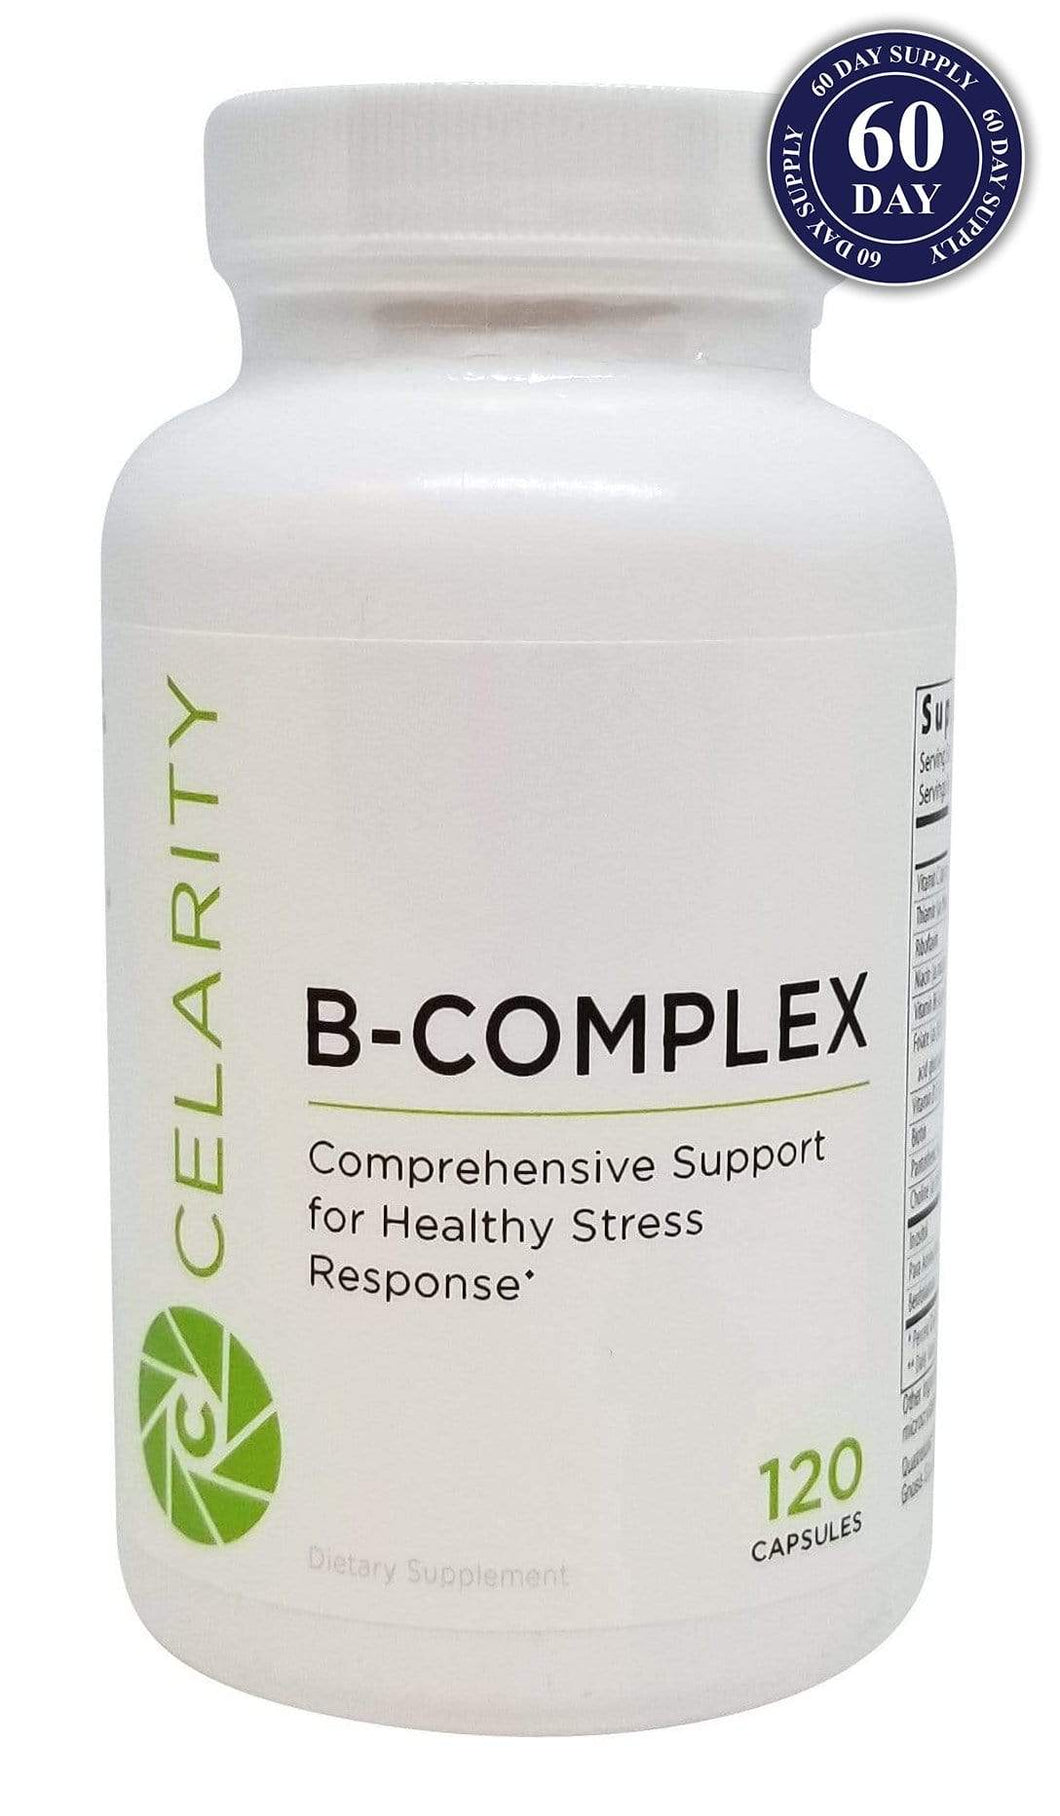 Celarity Vitamin B Complex (60 Day Supply)